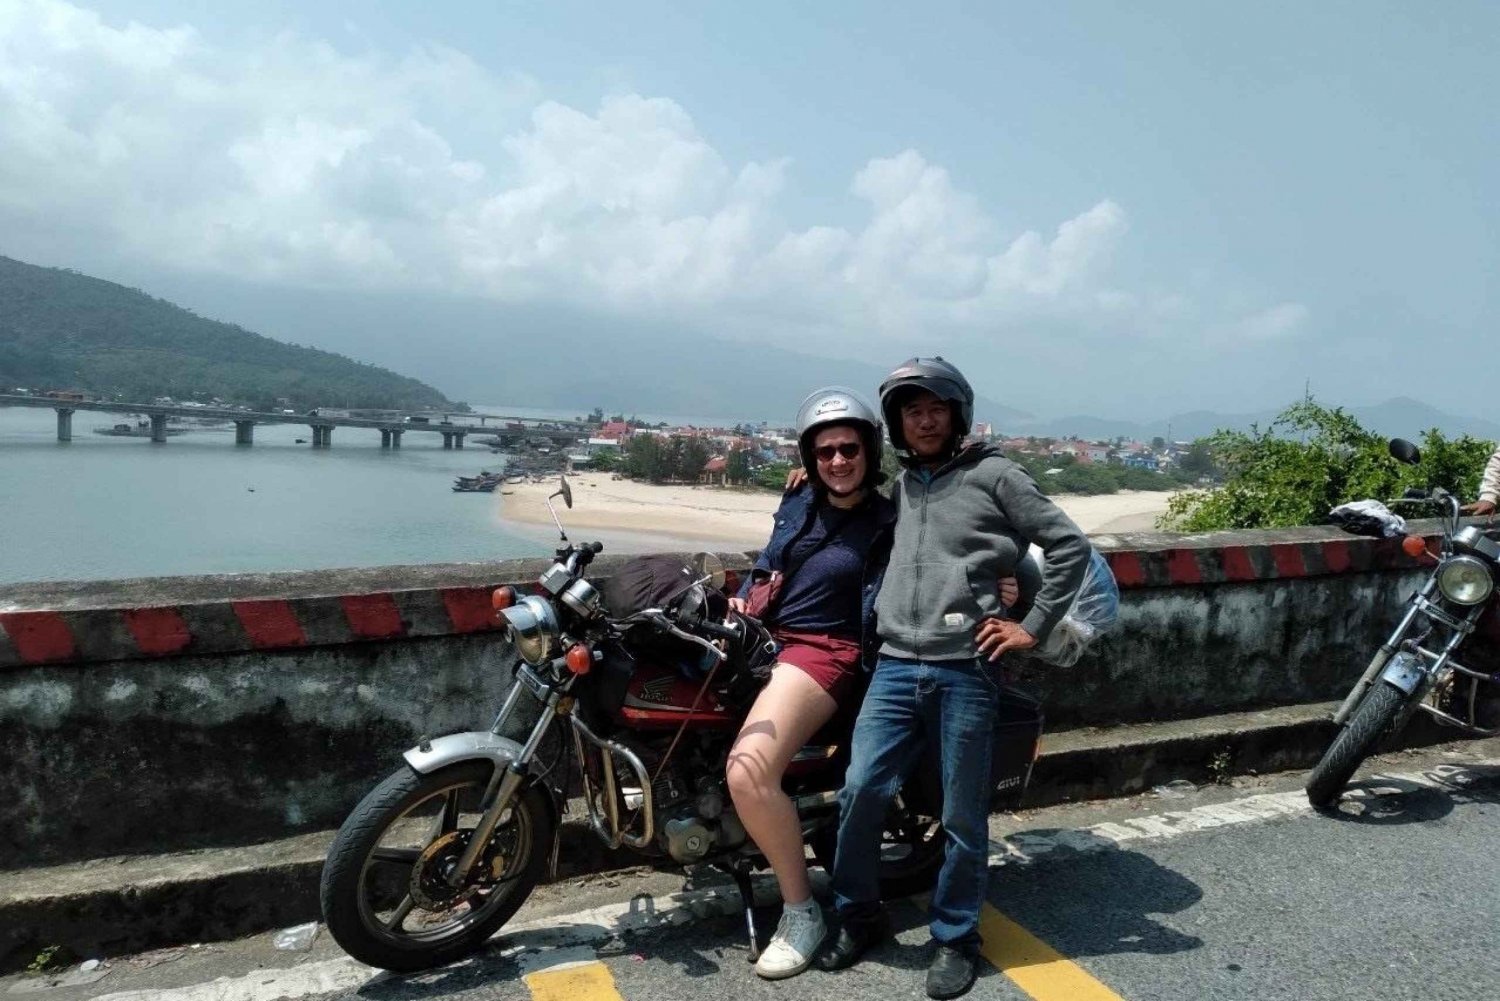 Hue til Hoi An med motorsykkel via Hai Van Pass (eller omvendt)